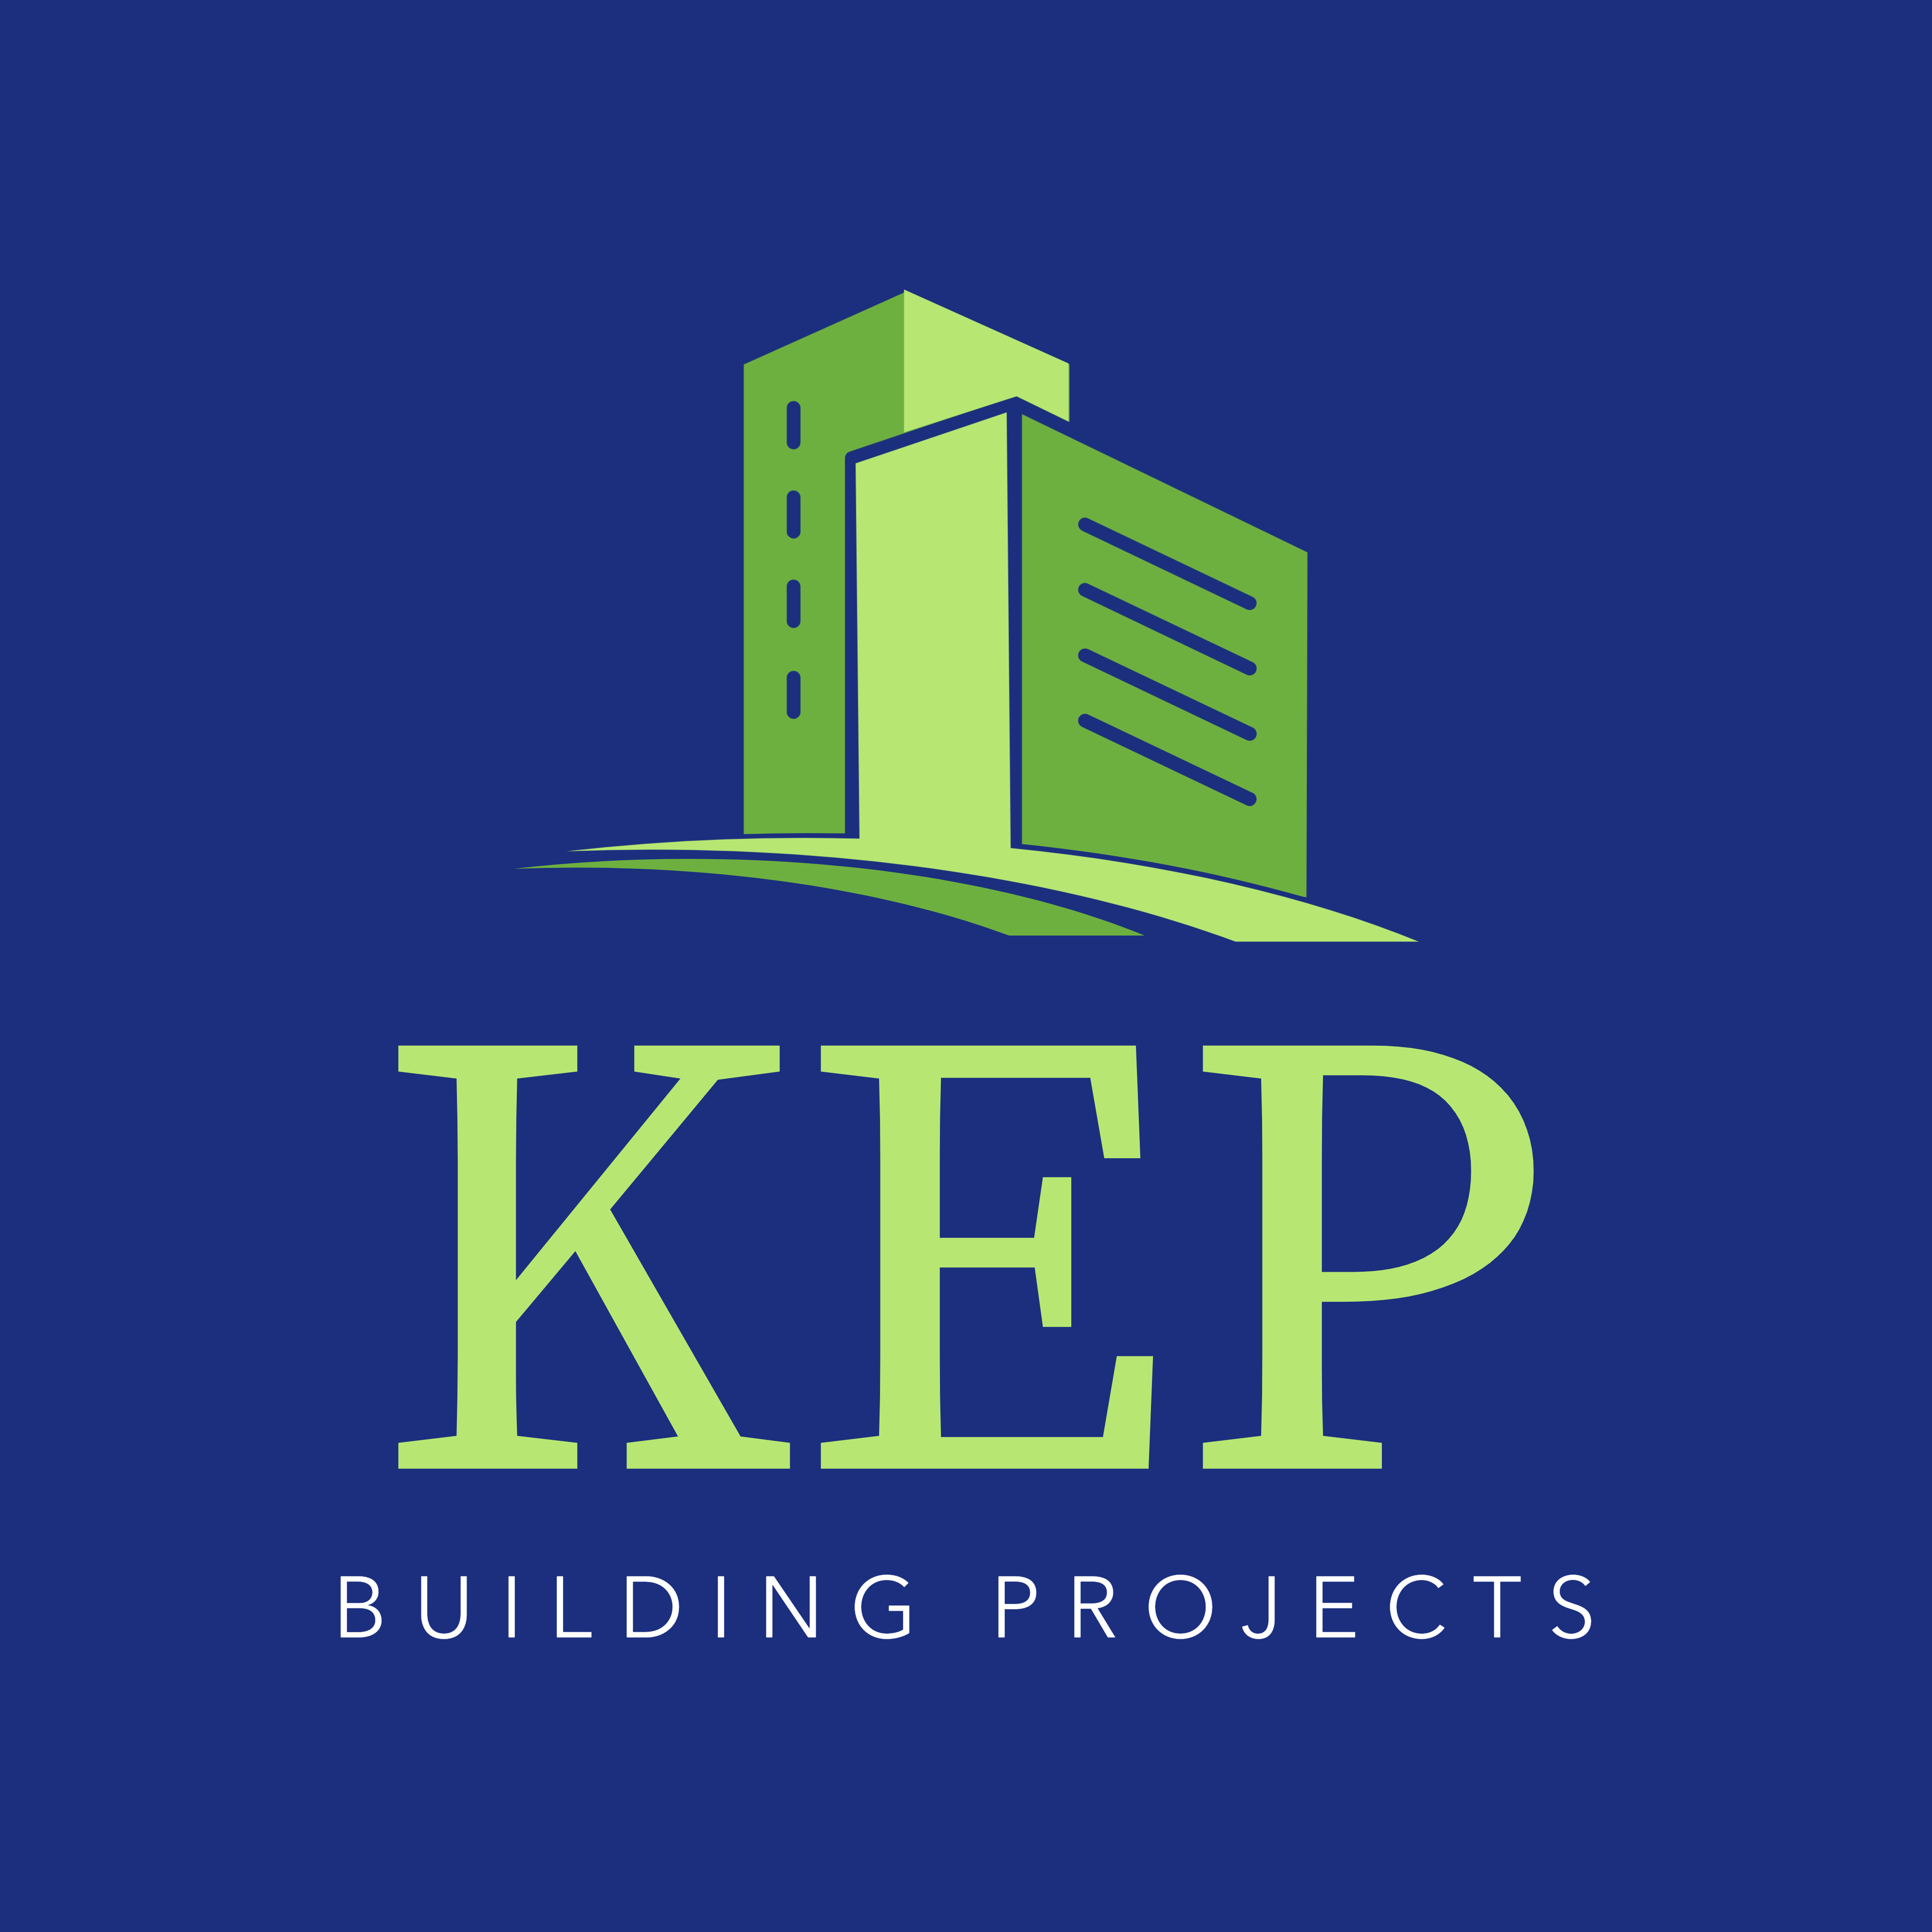 KEP Construction